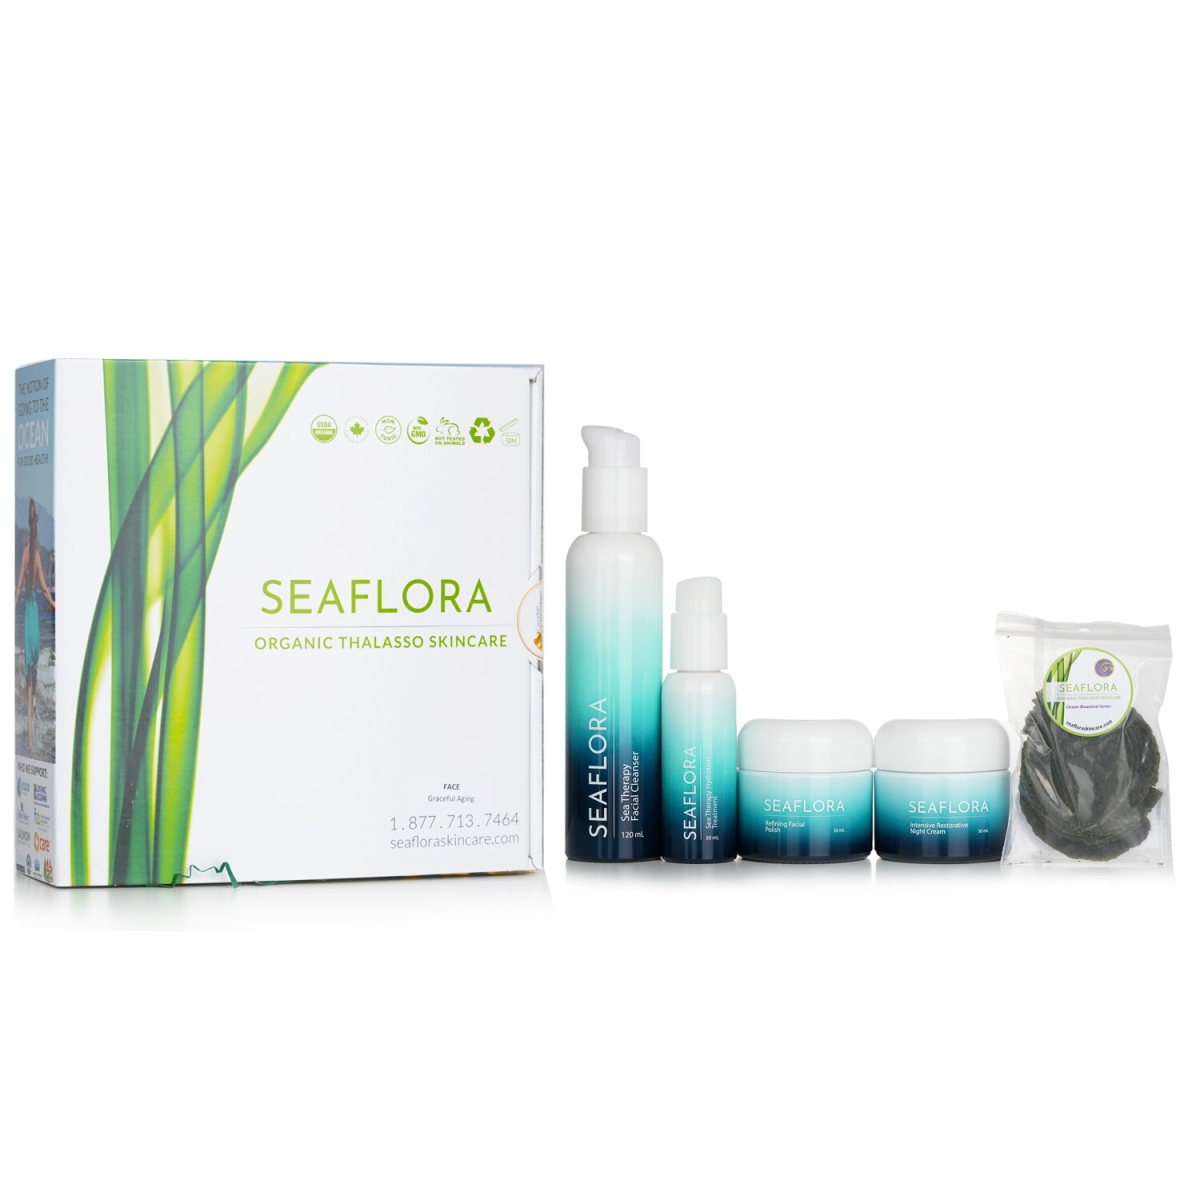 Picture of Seaflora 279871 Organic Thalasso Skincare Graceful Anti-Aging Gift Set - 5 Piece